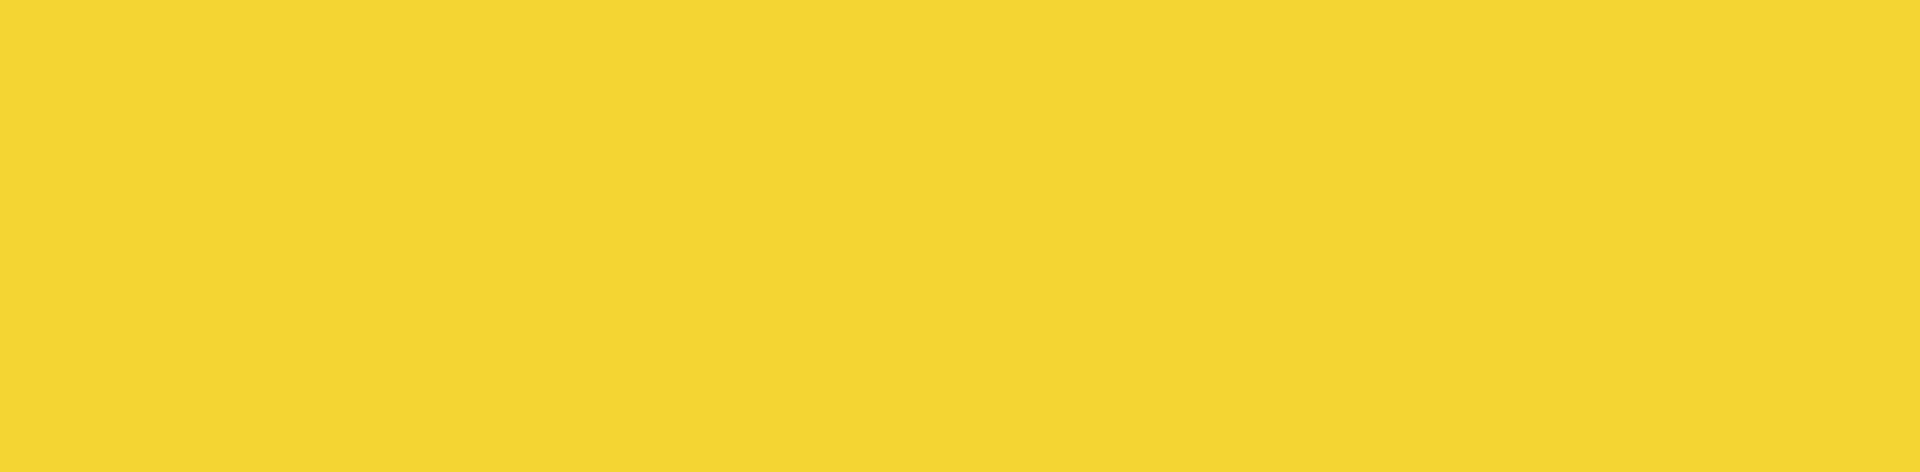 rectangle jaune